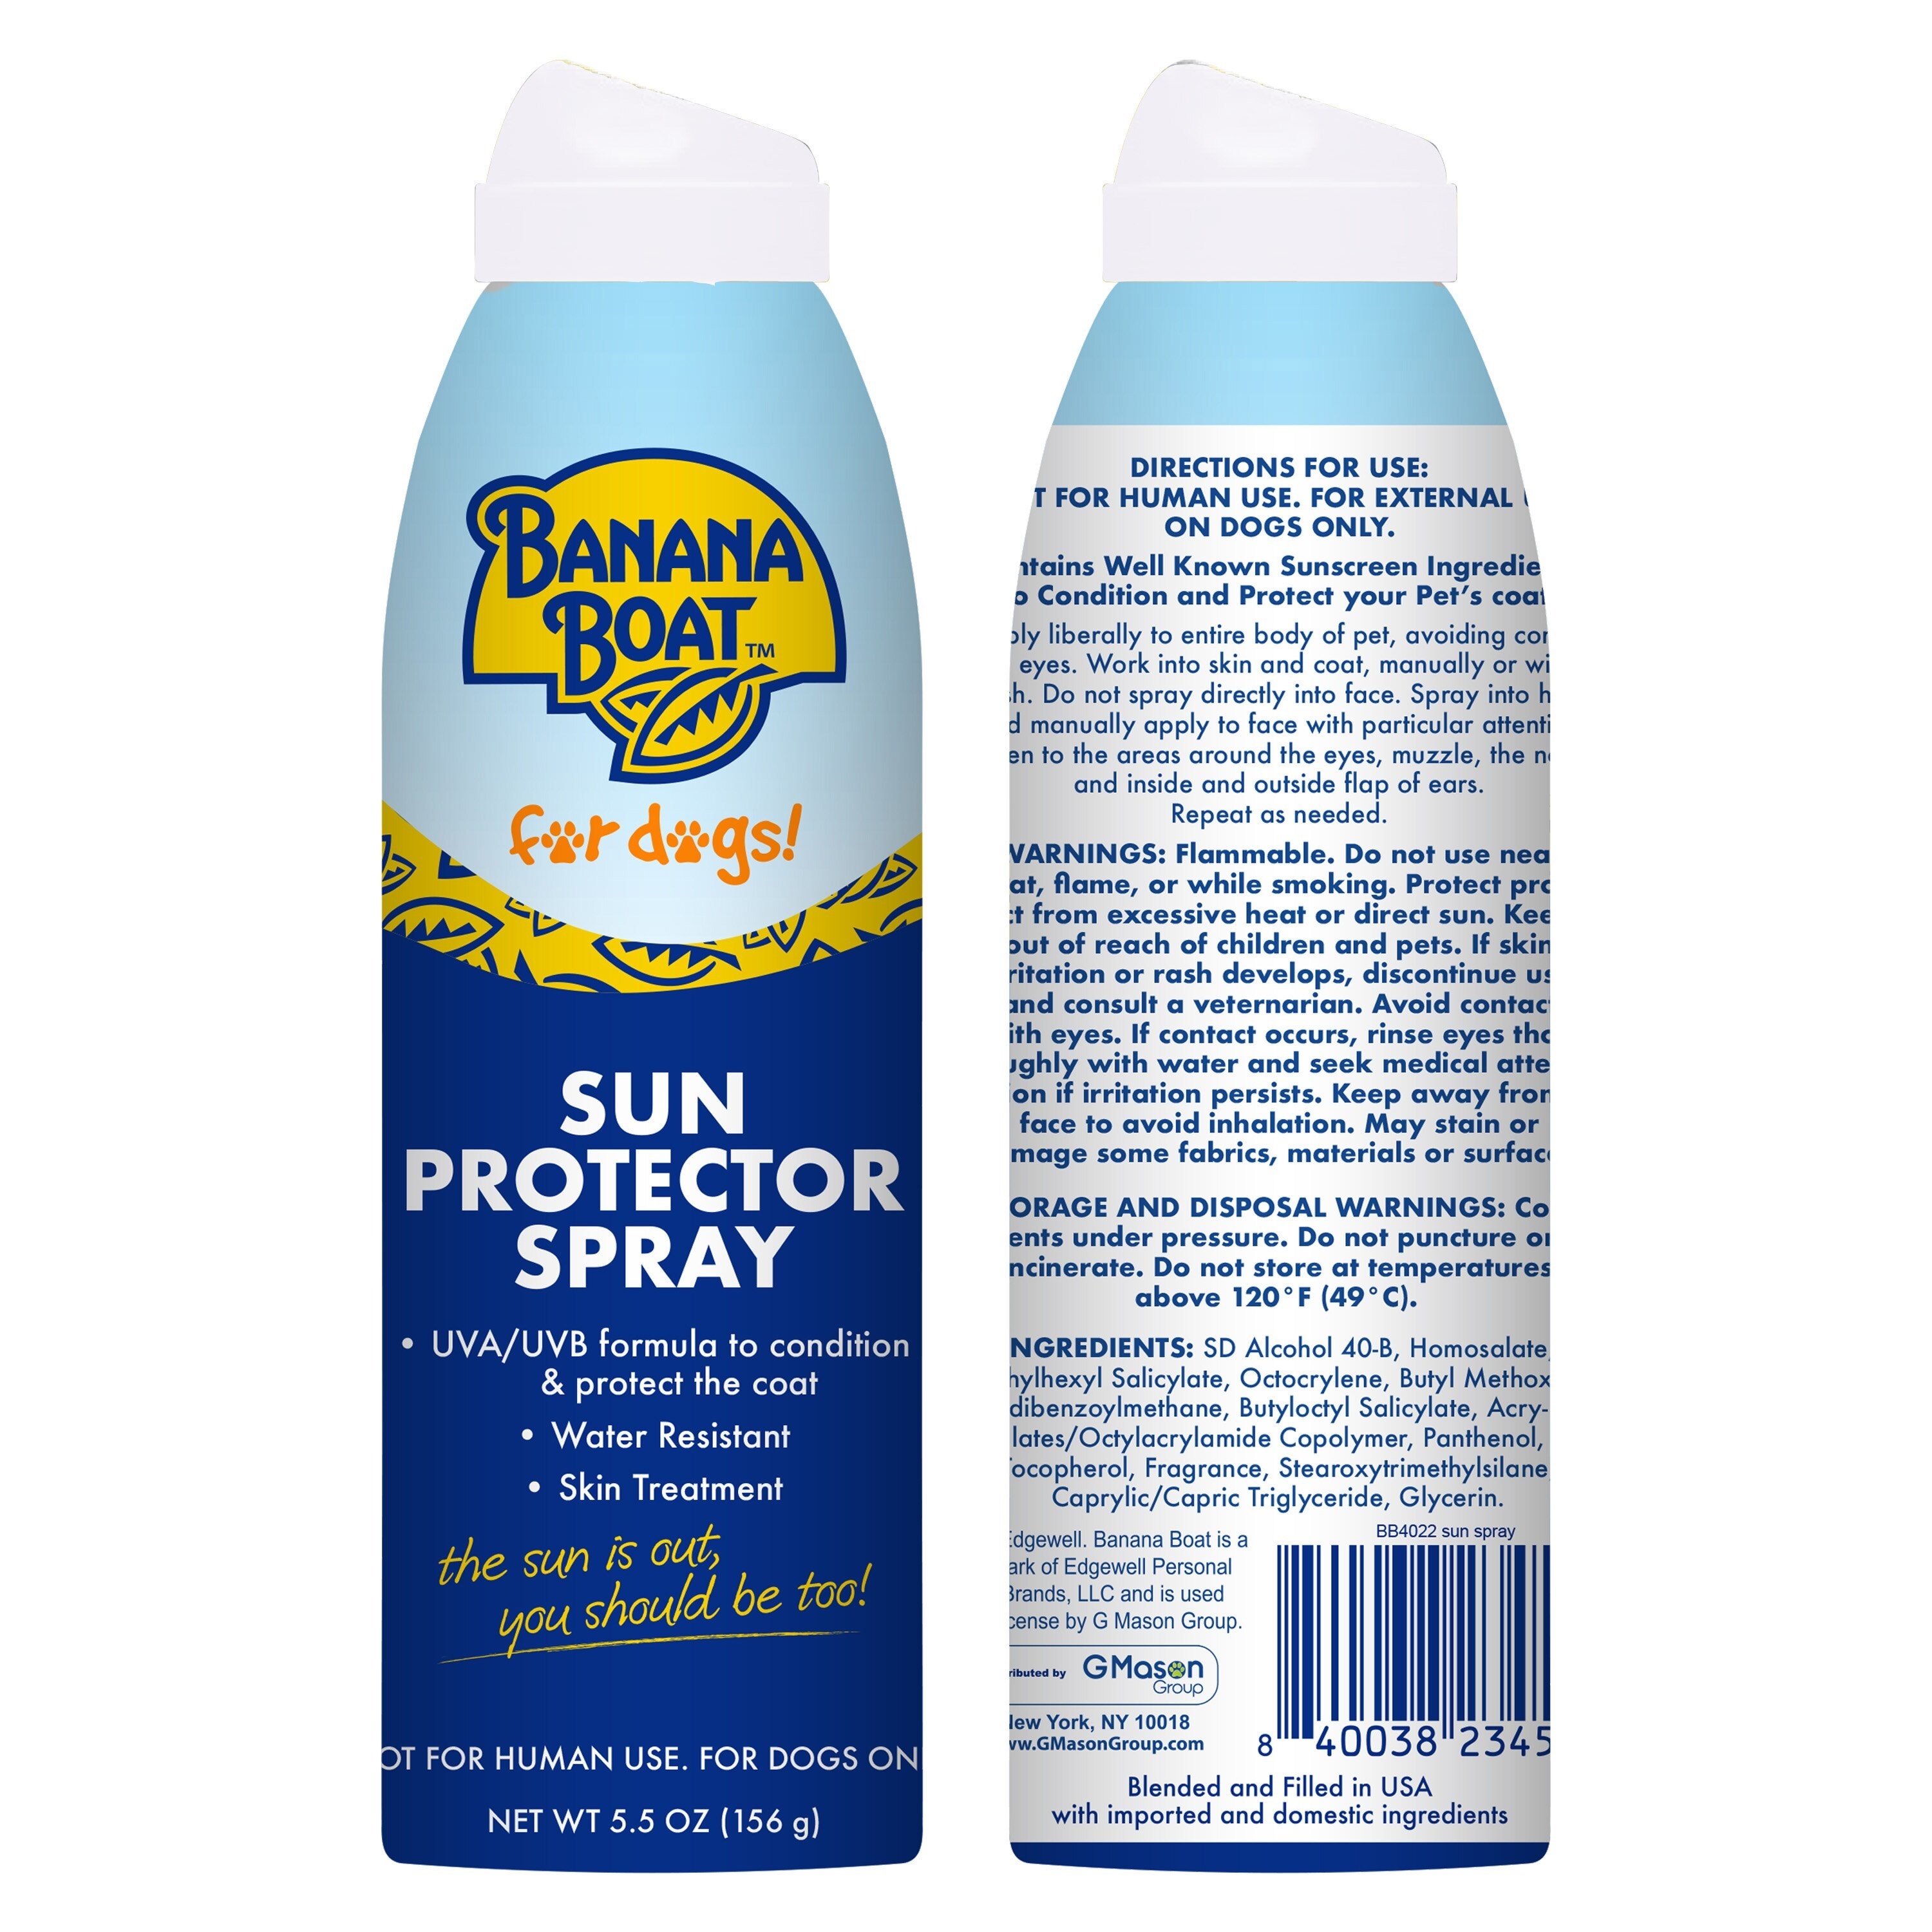 Banana boat sun protector spray for dogs